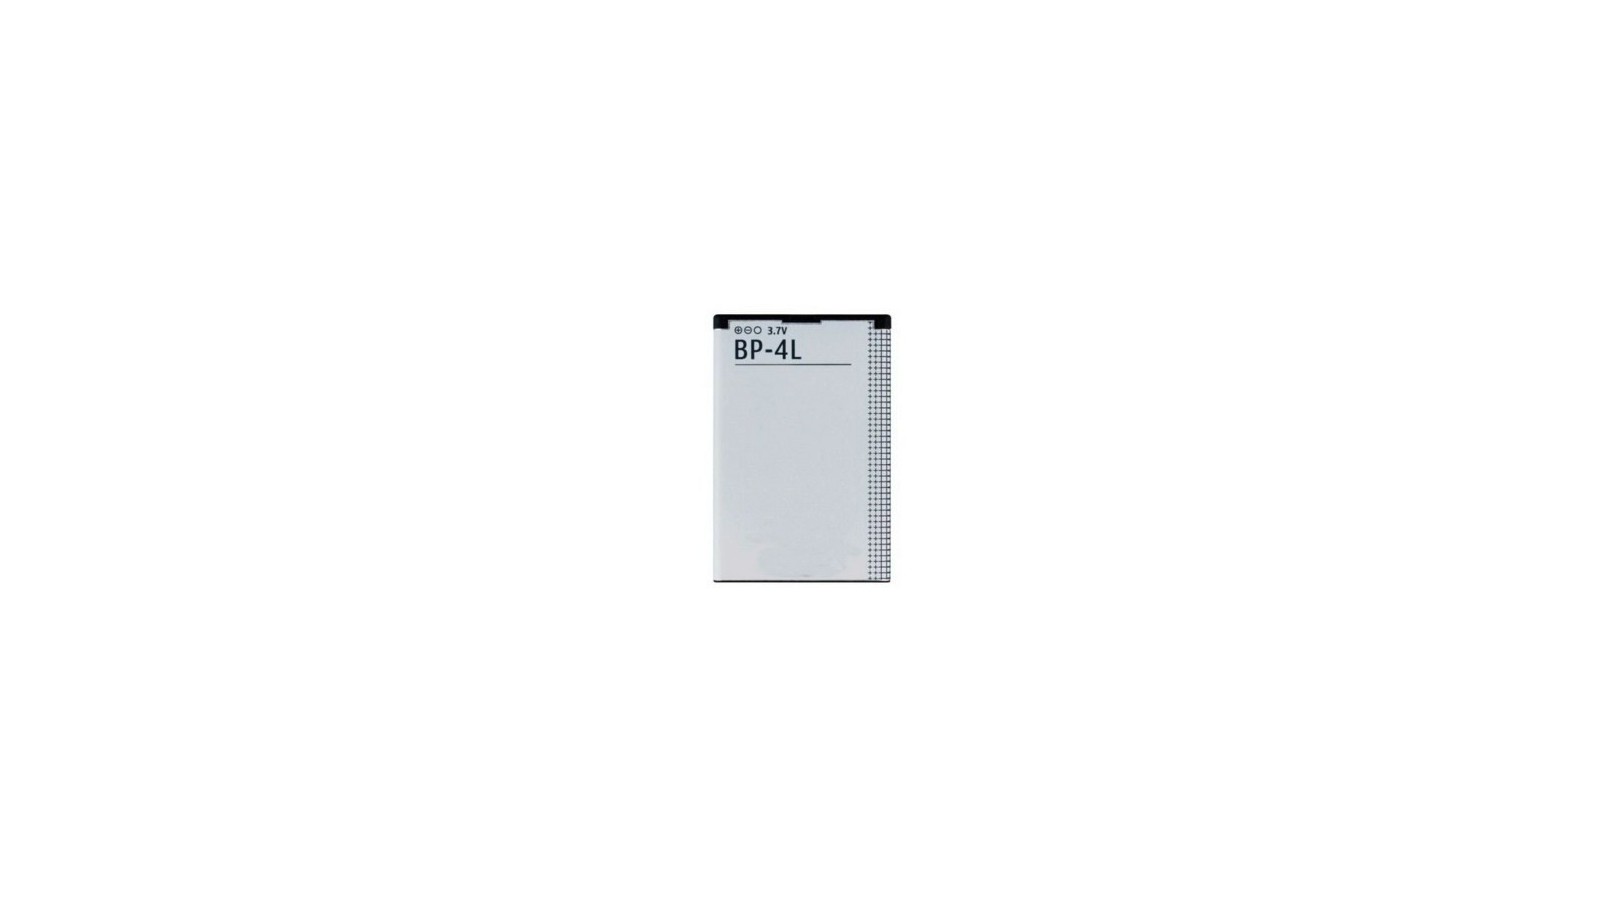 Batteria per Nokia BP-4L E90 Communicator /E60/E50/ E52 / E55 / E61i / E63  / E71 / E72 / E90 / N810  N97 / 6760 Slid